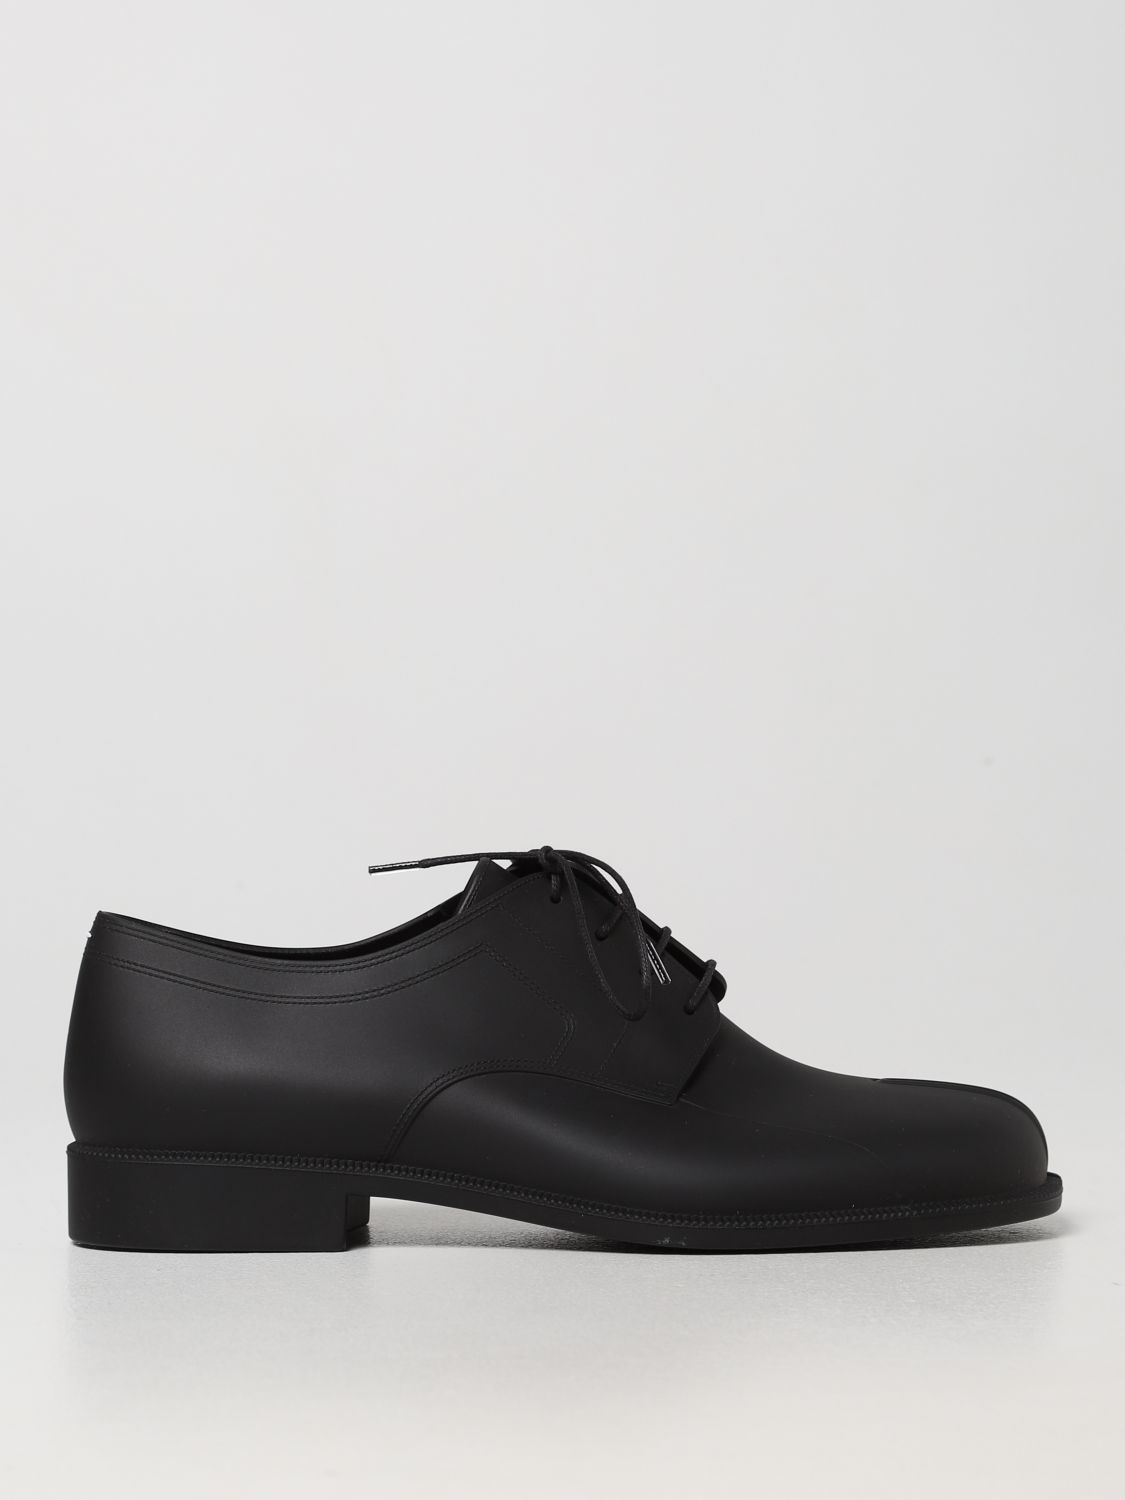 Maison Margiela Leder schnürschuhe in Schwarz für Herren Herren Schuhe Schnürschuhe Oxford Schuhe 